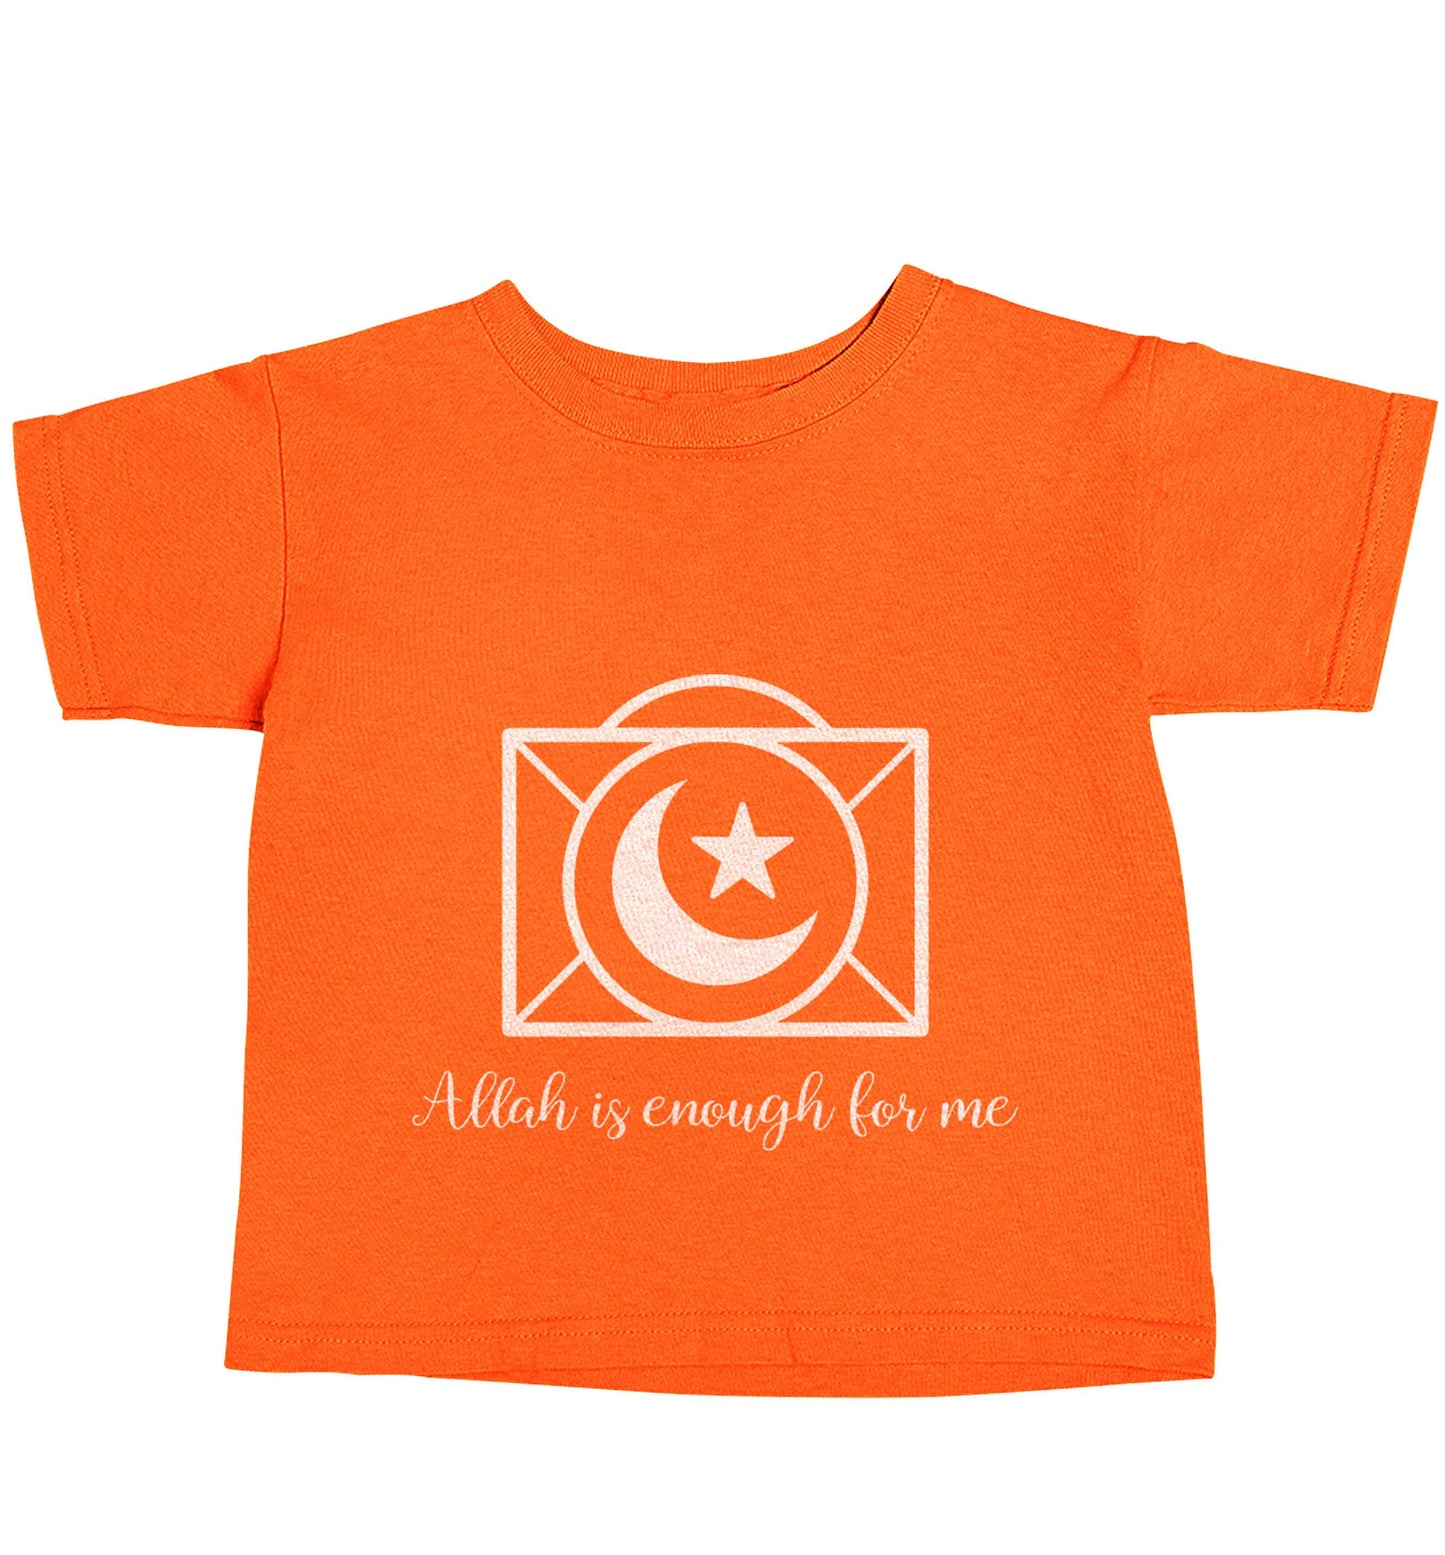 Allah is enough for me orange baby toddler Tshirt 2 Years